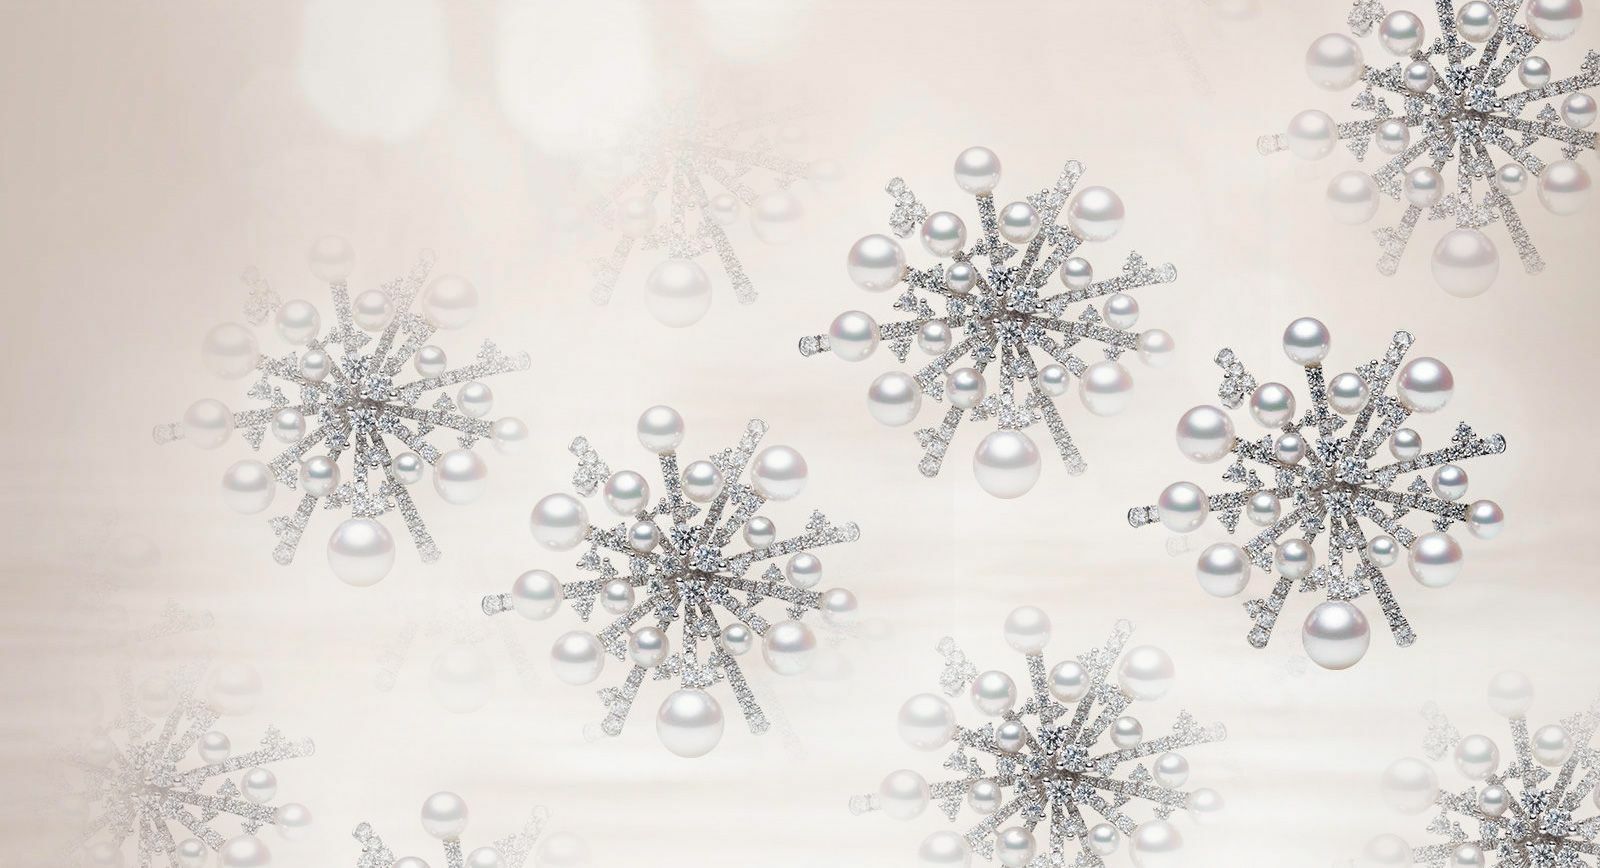 Enchanting Winter: jewellery inspired by the frosty season